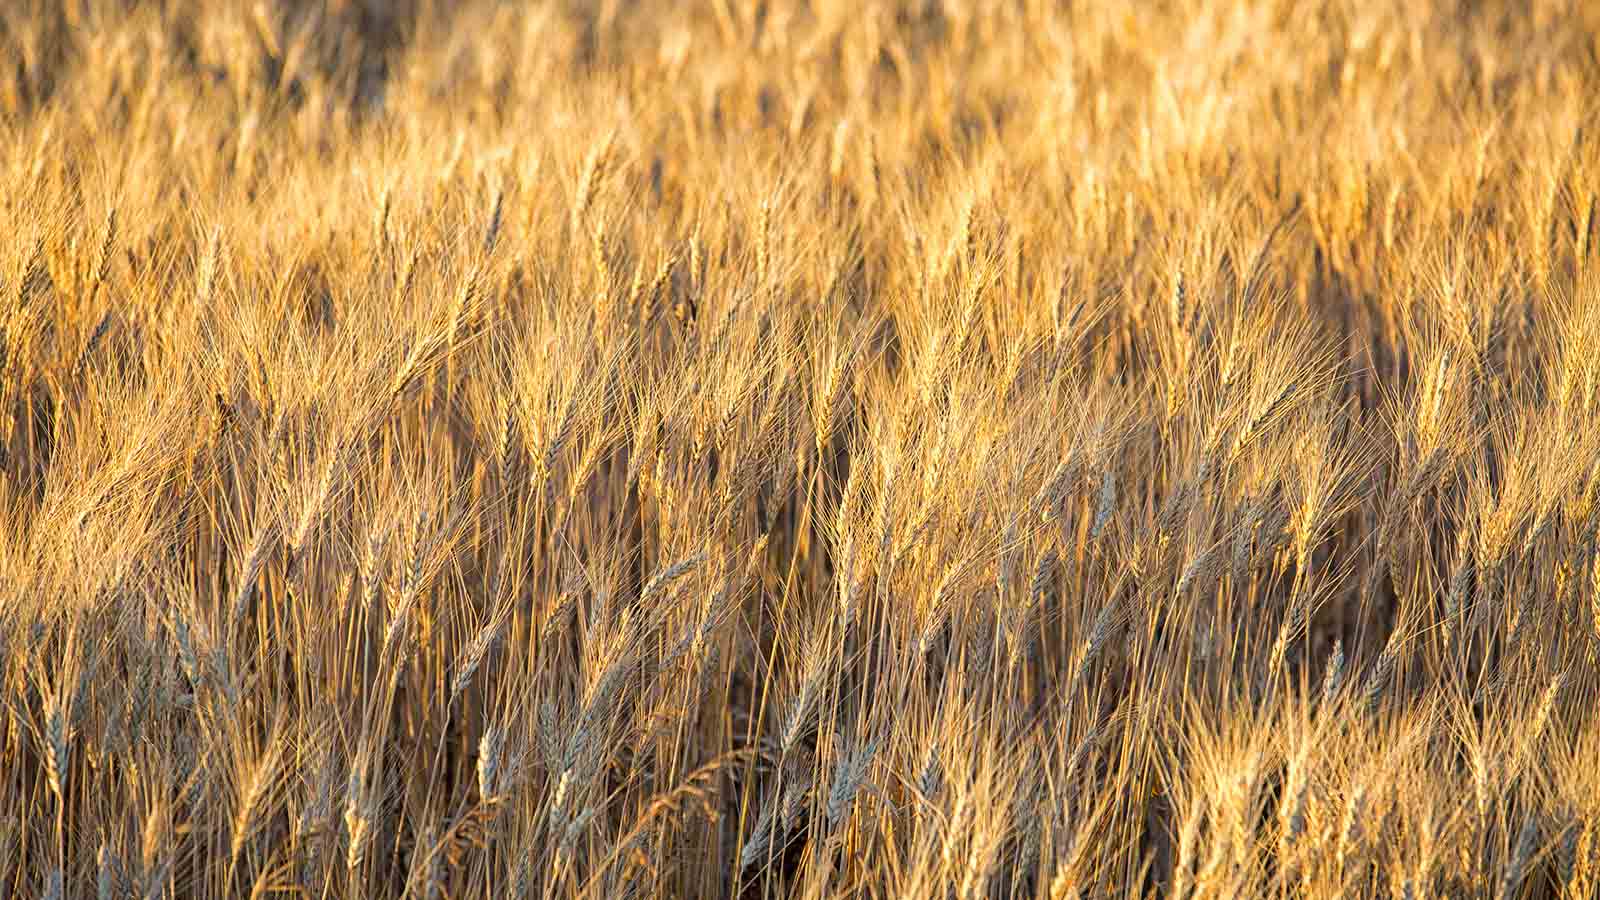 Harvest grains